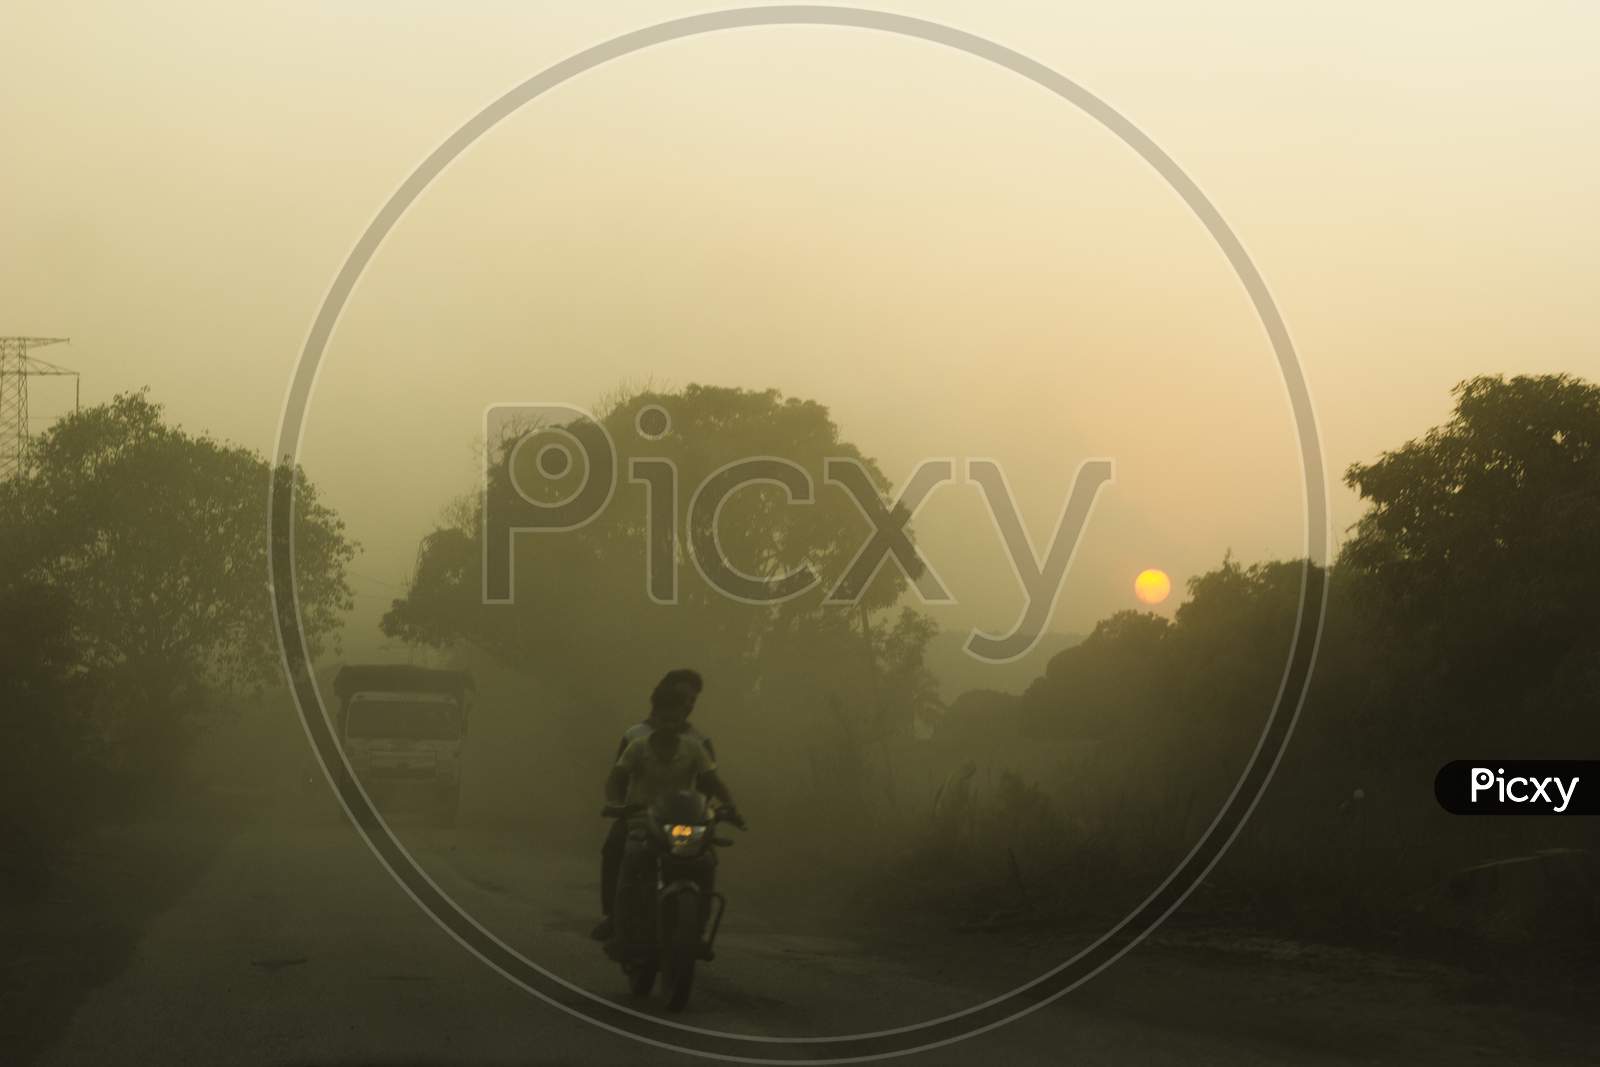 Dusty Road air Pollution